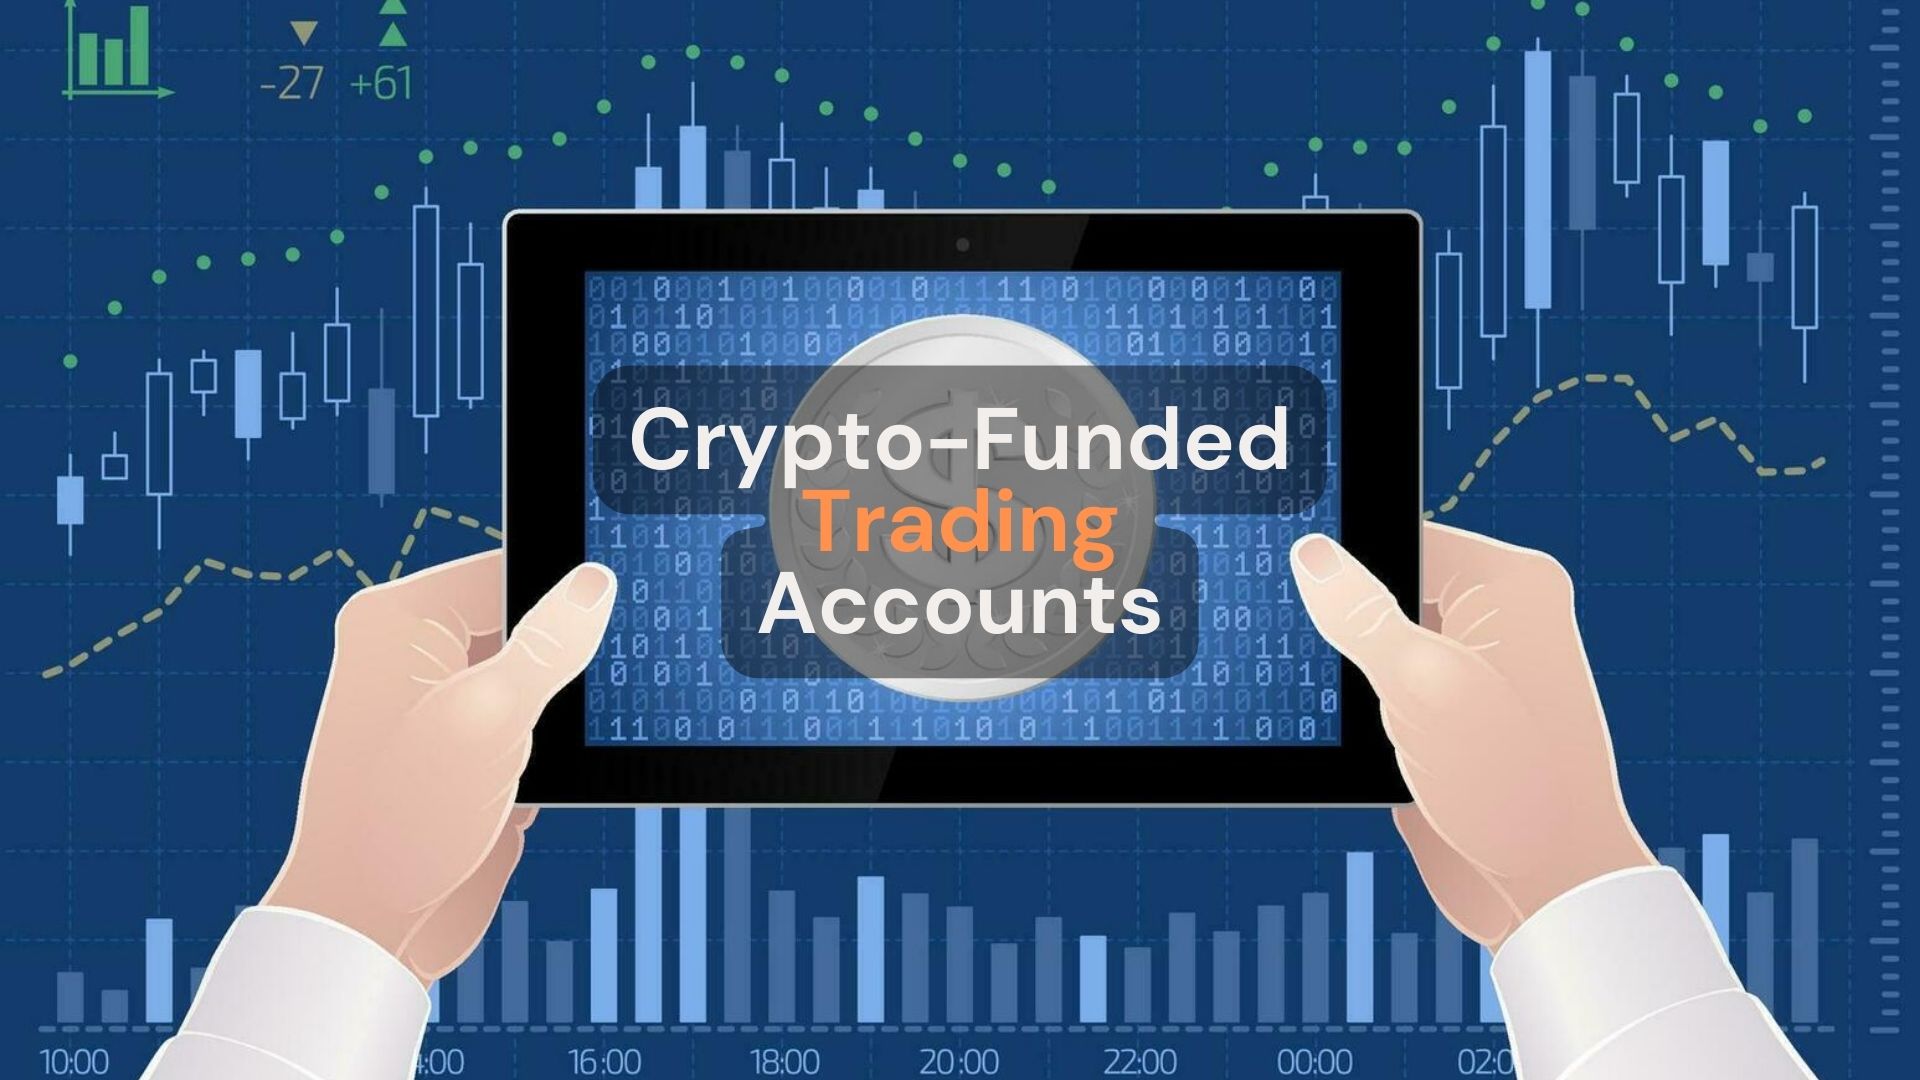 Crypto-Funded Trading Accounts